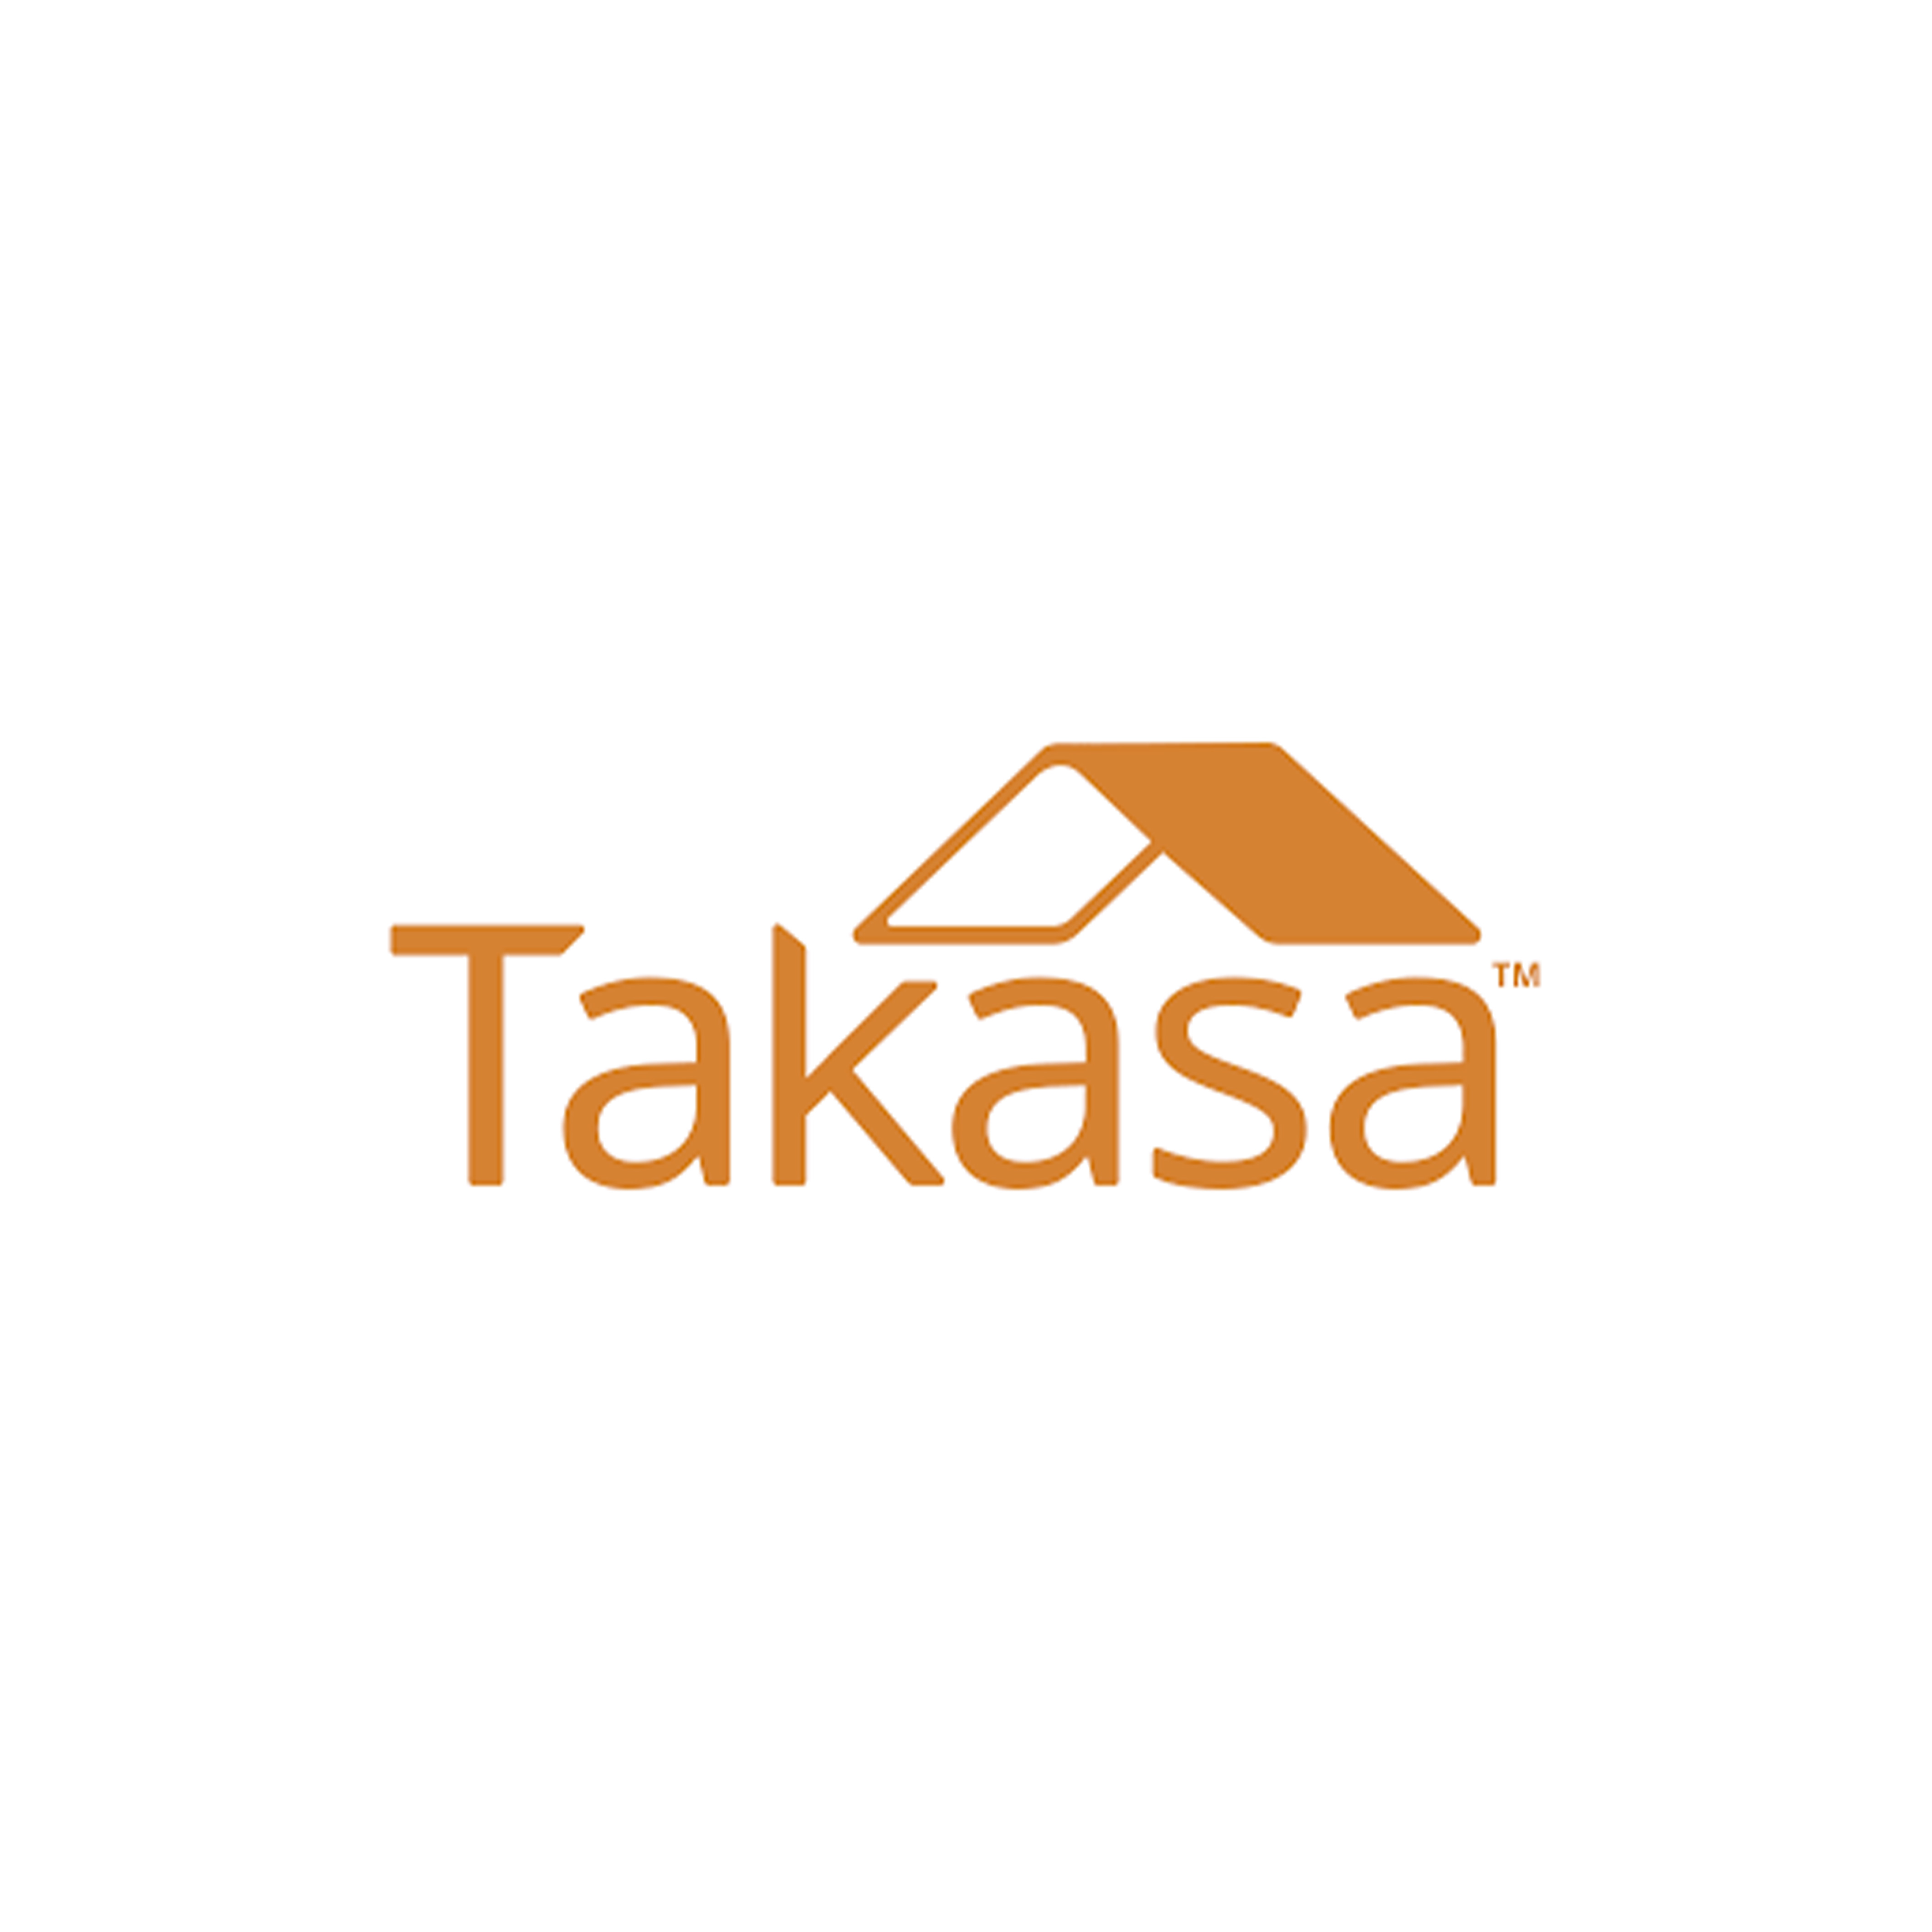 Takasa logo